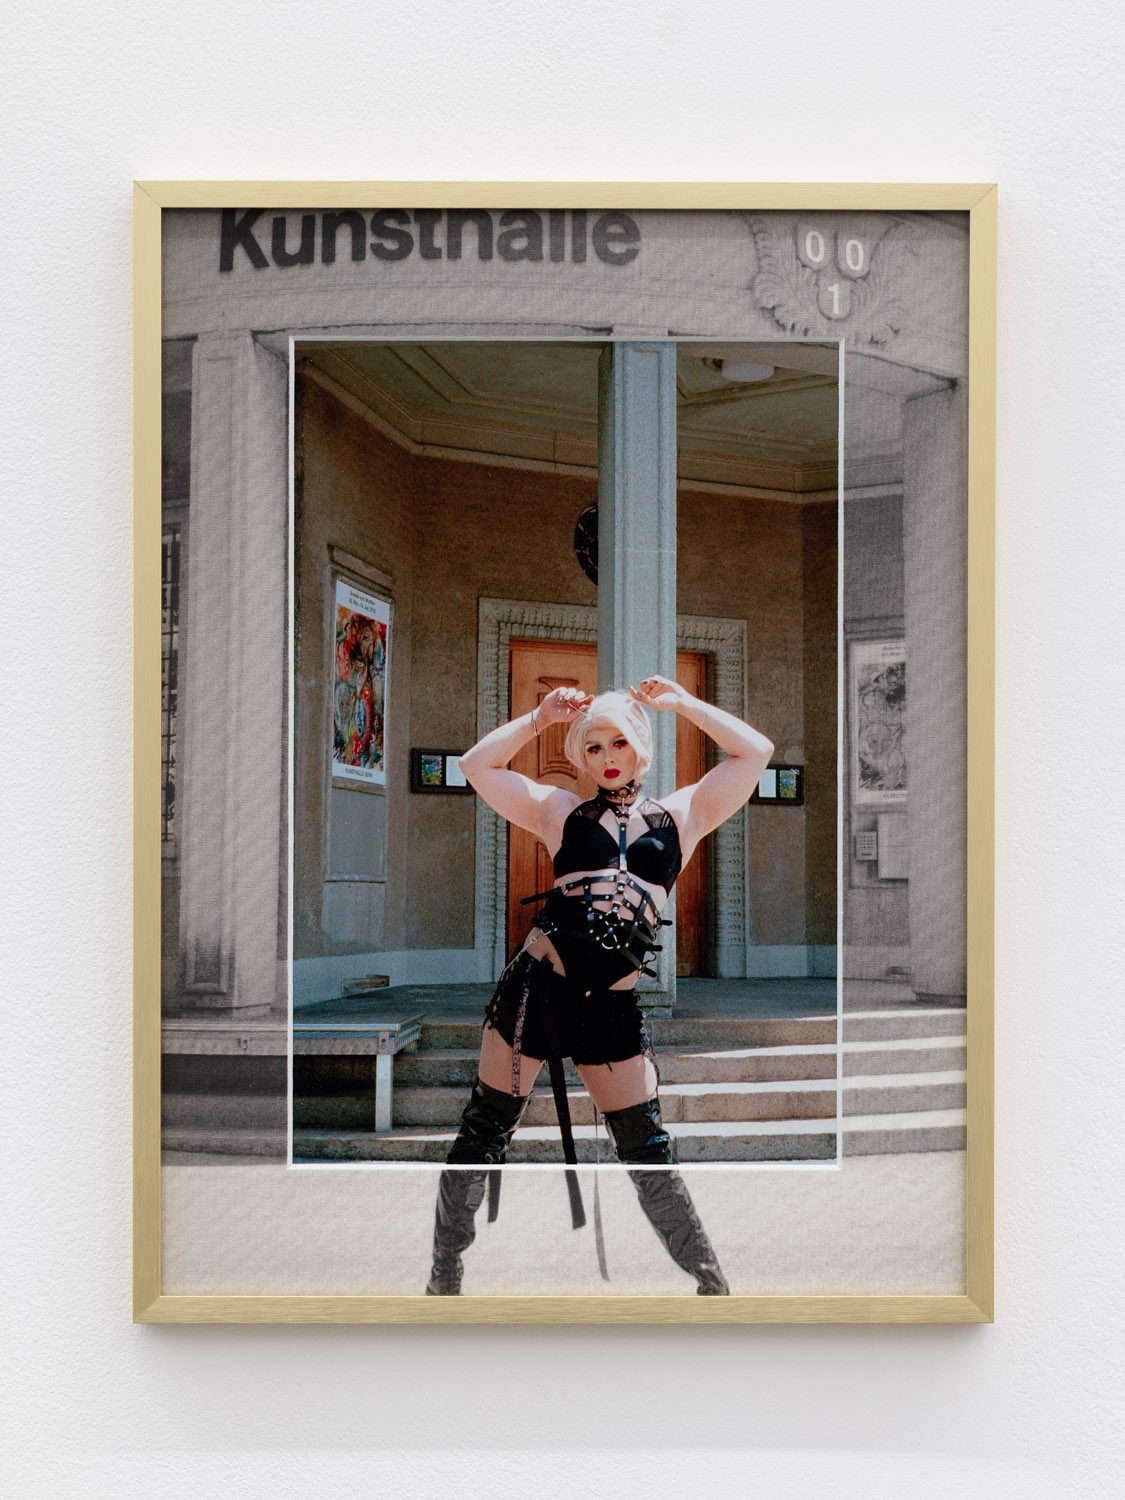 Philipp TimischlDowntown Bern (Helvetiaplatz), 2019C-print, framed with custom passepartout40 x 30 cm